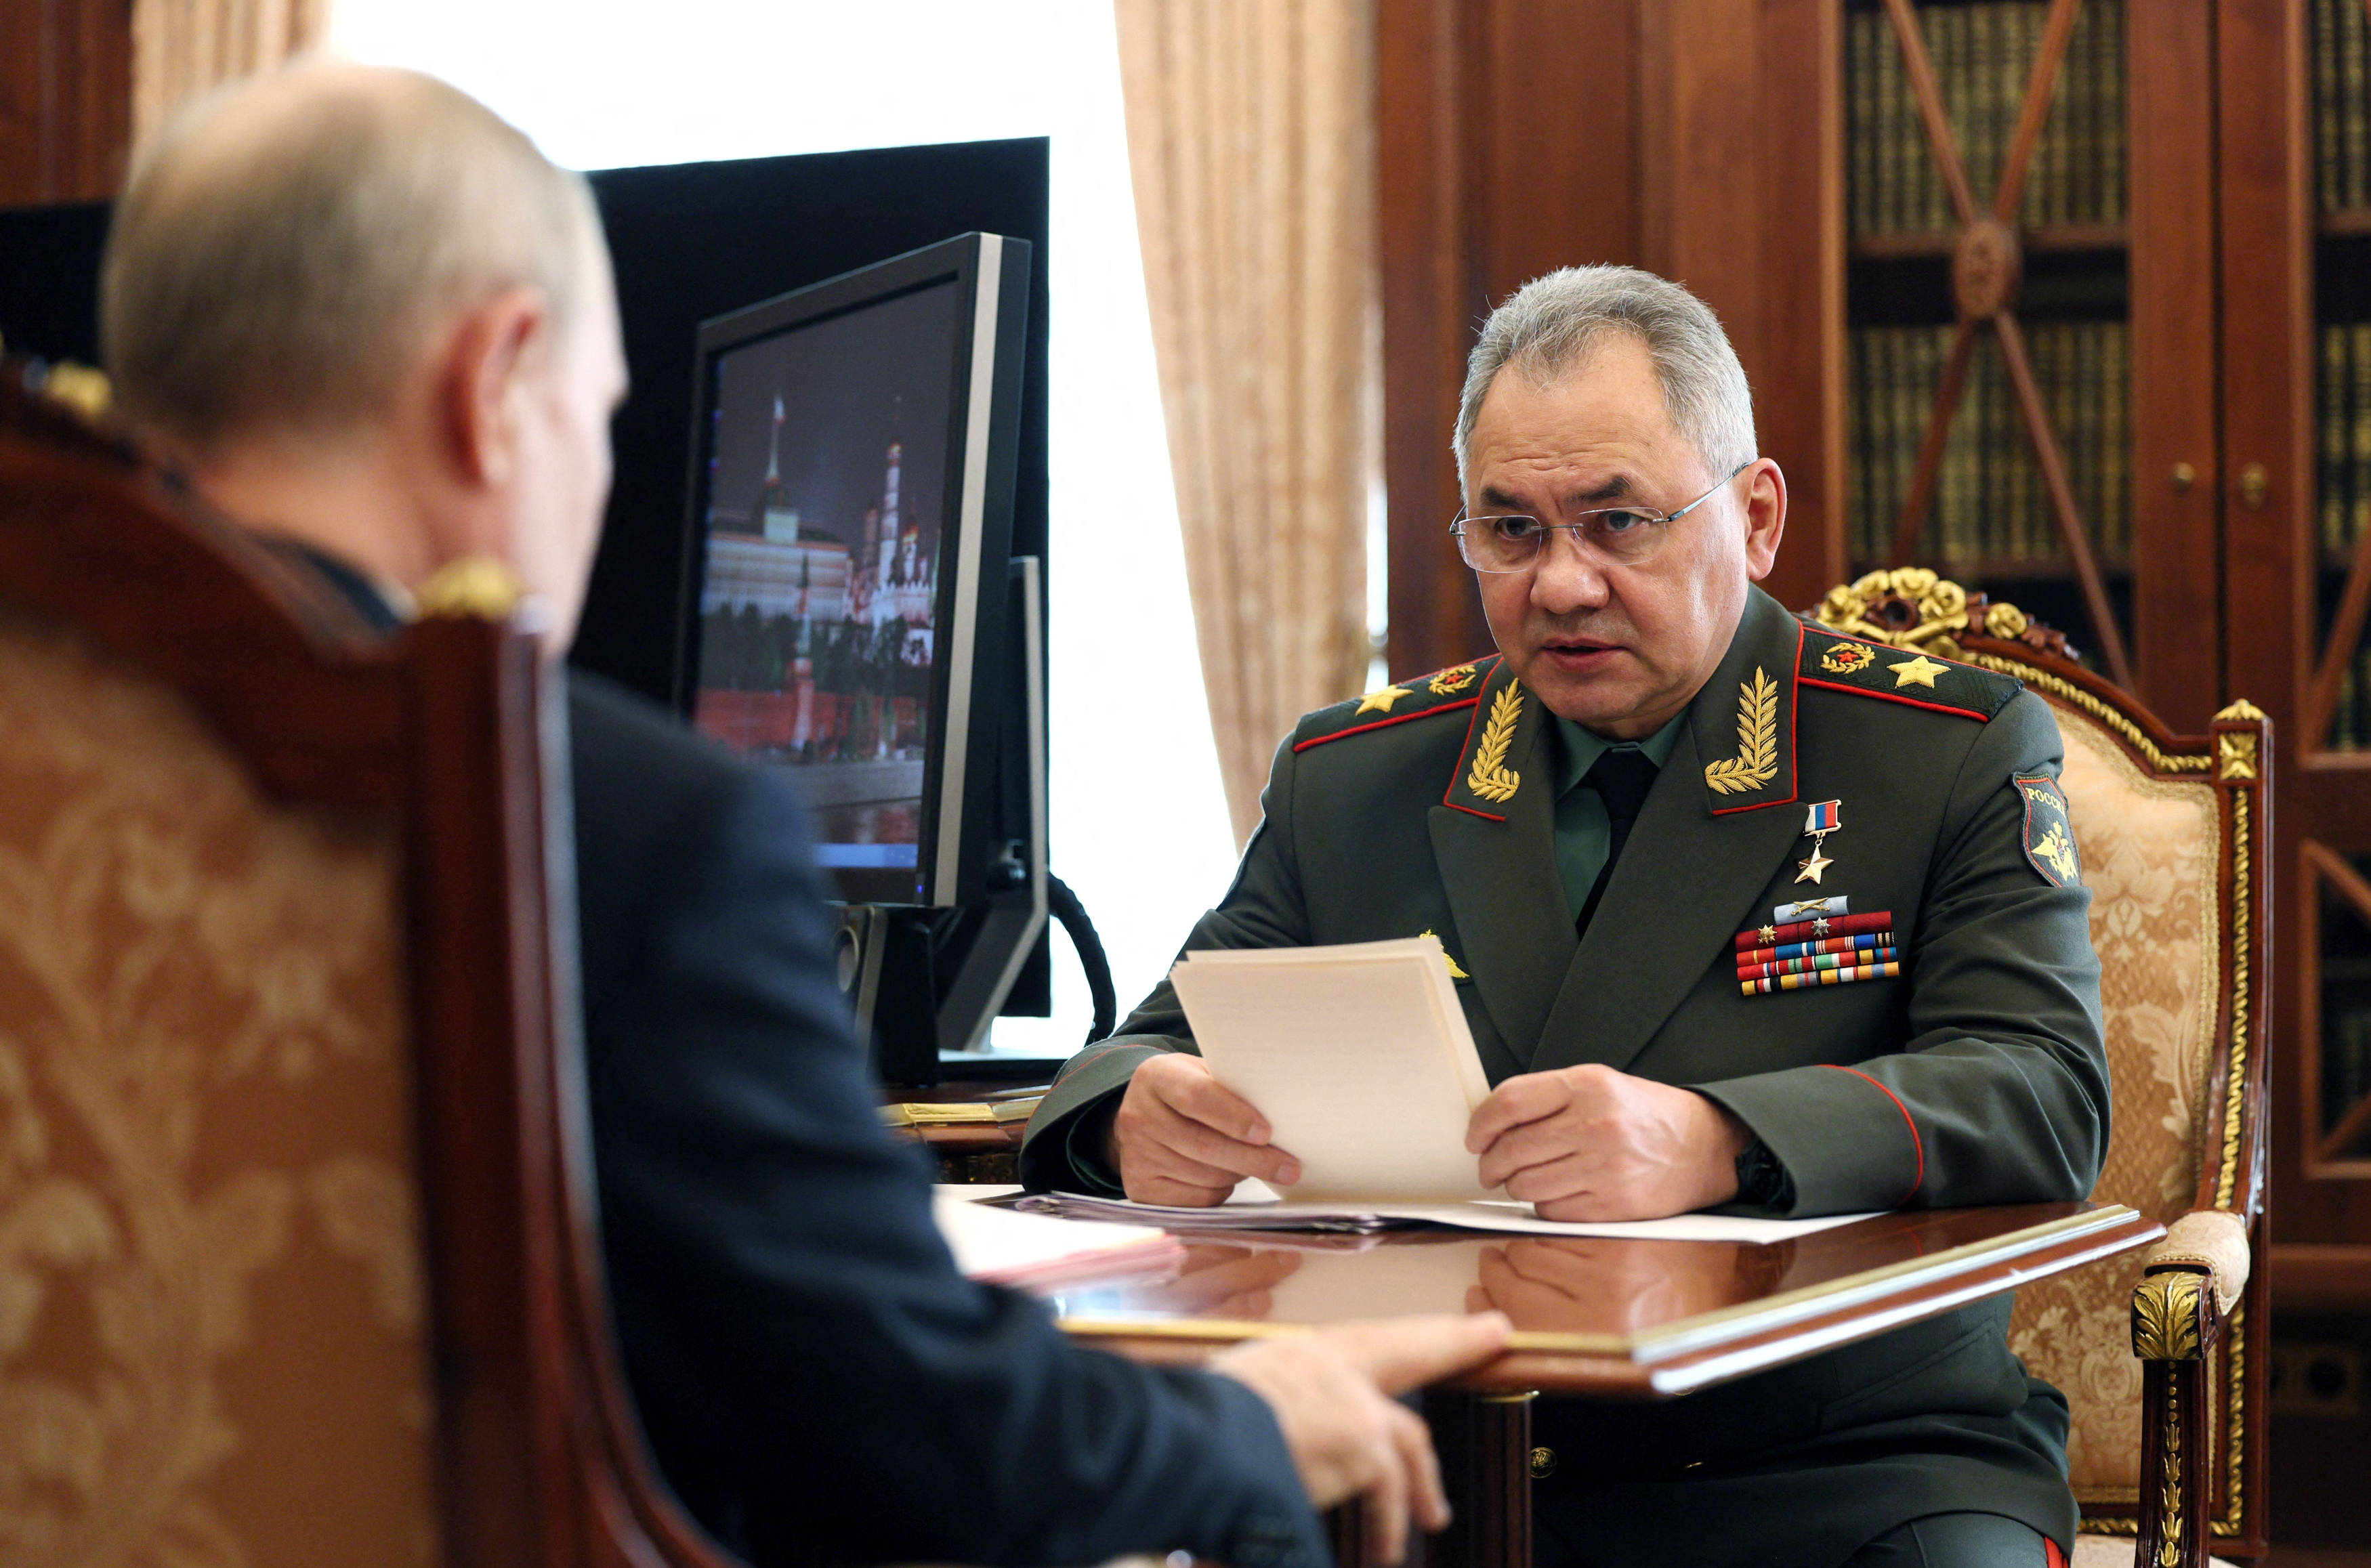 Shoigu lying to Putin about “colossal” battlefield failures, Prigozhin says